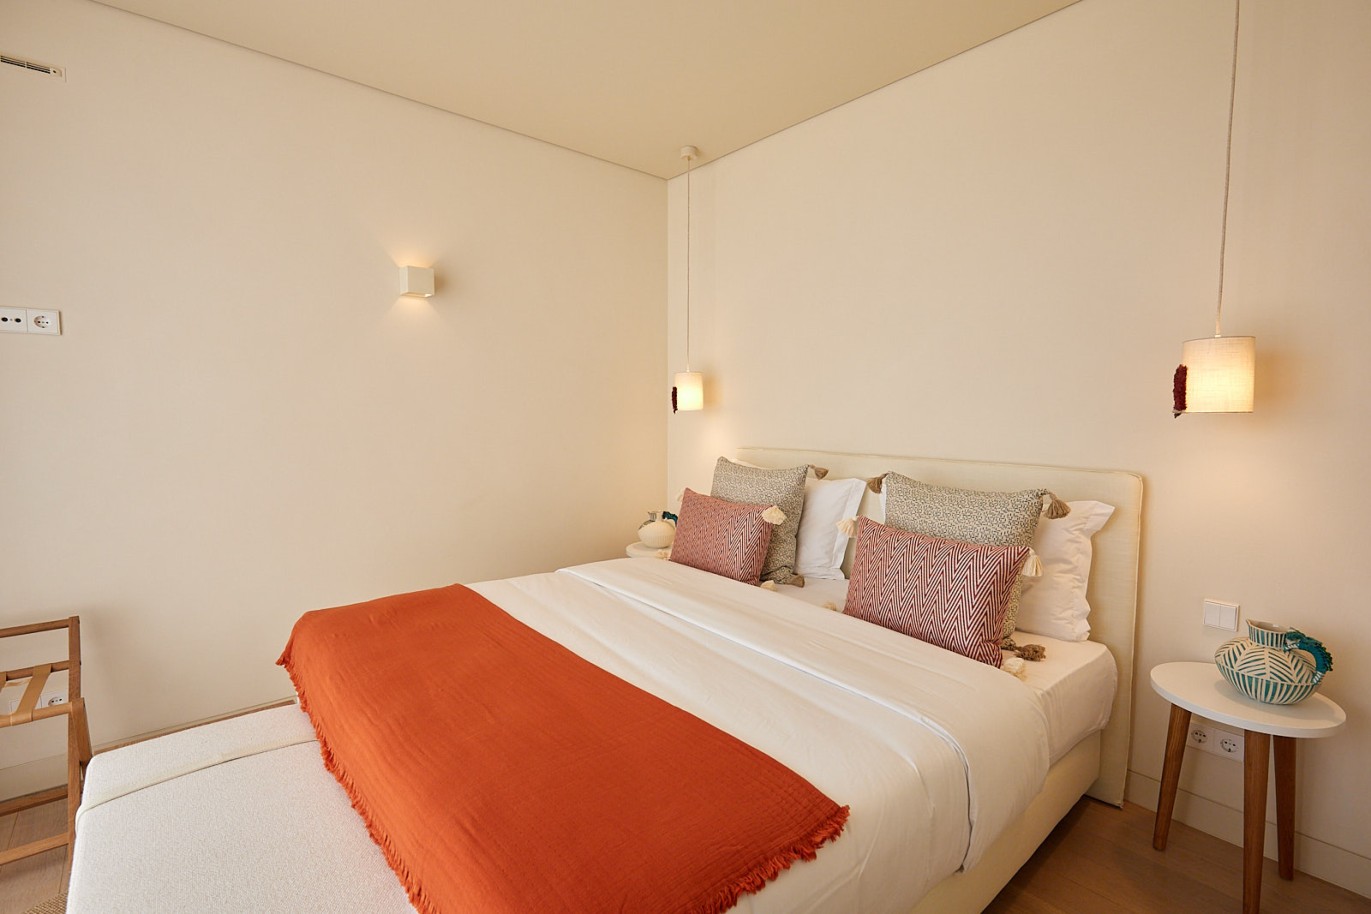 2 bedroom apartment in resort, for sale in Porches, Algarve_229246